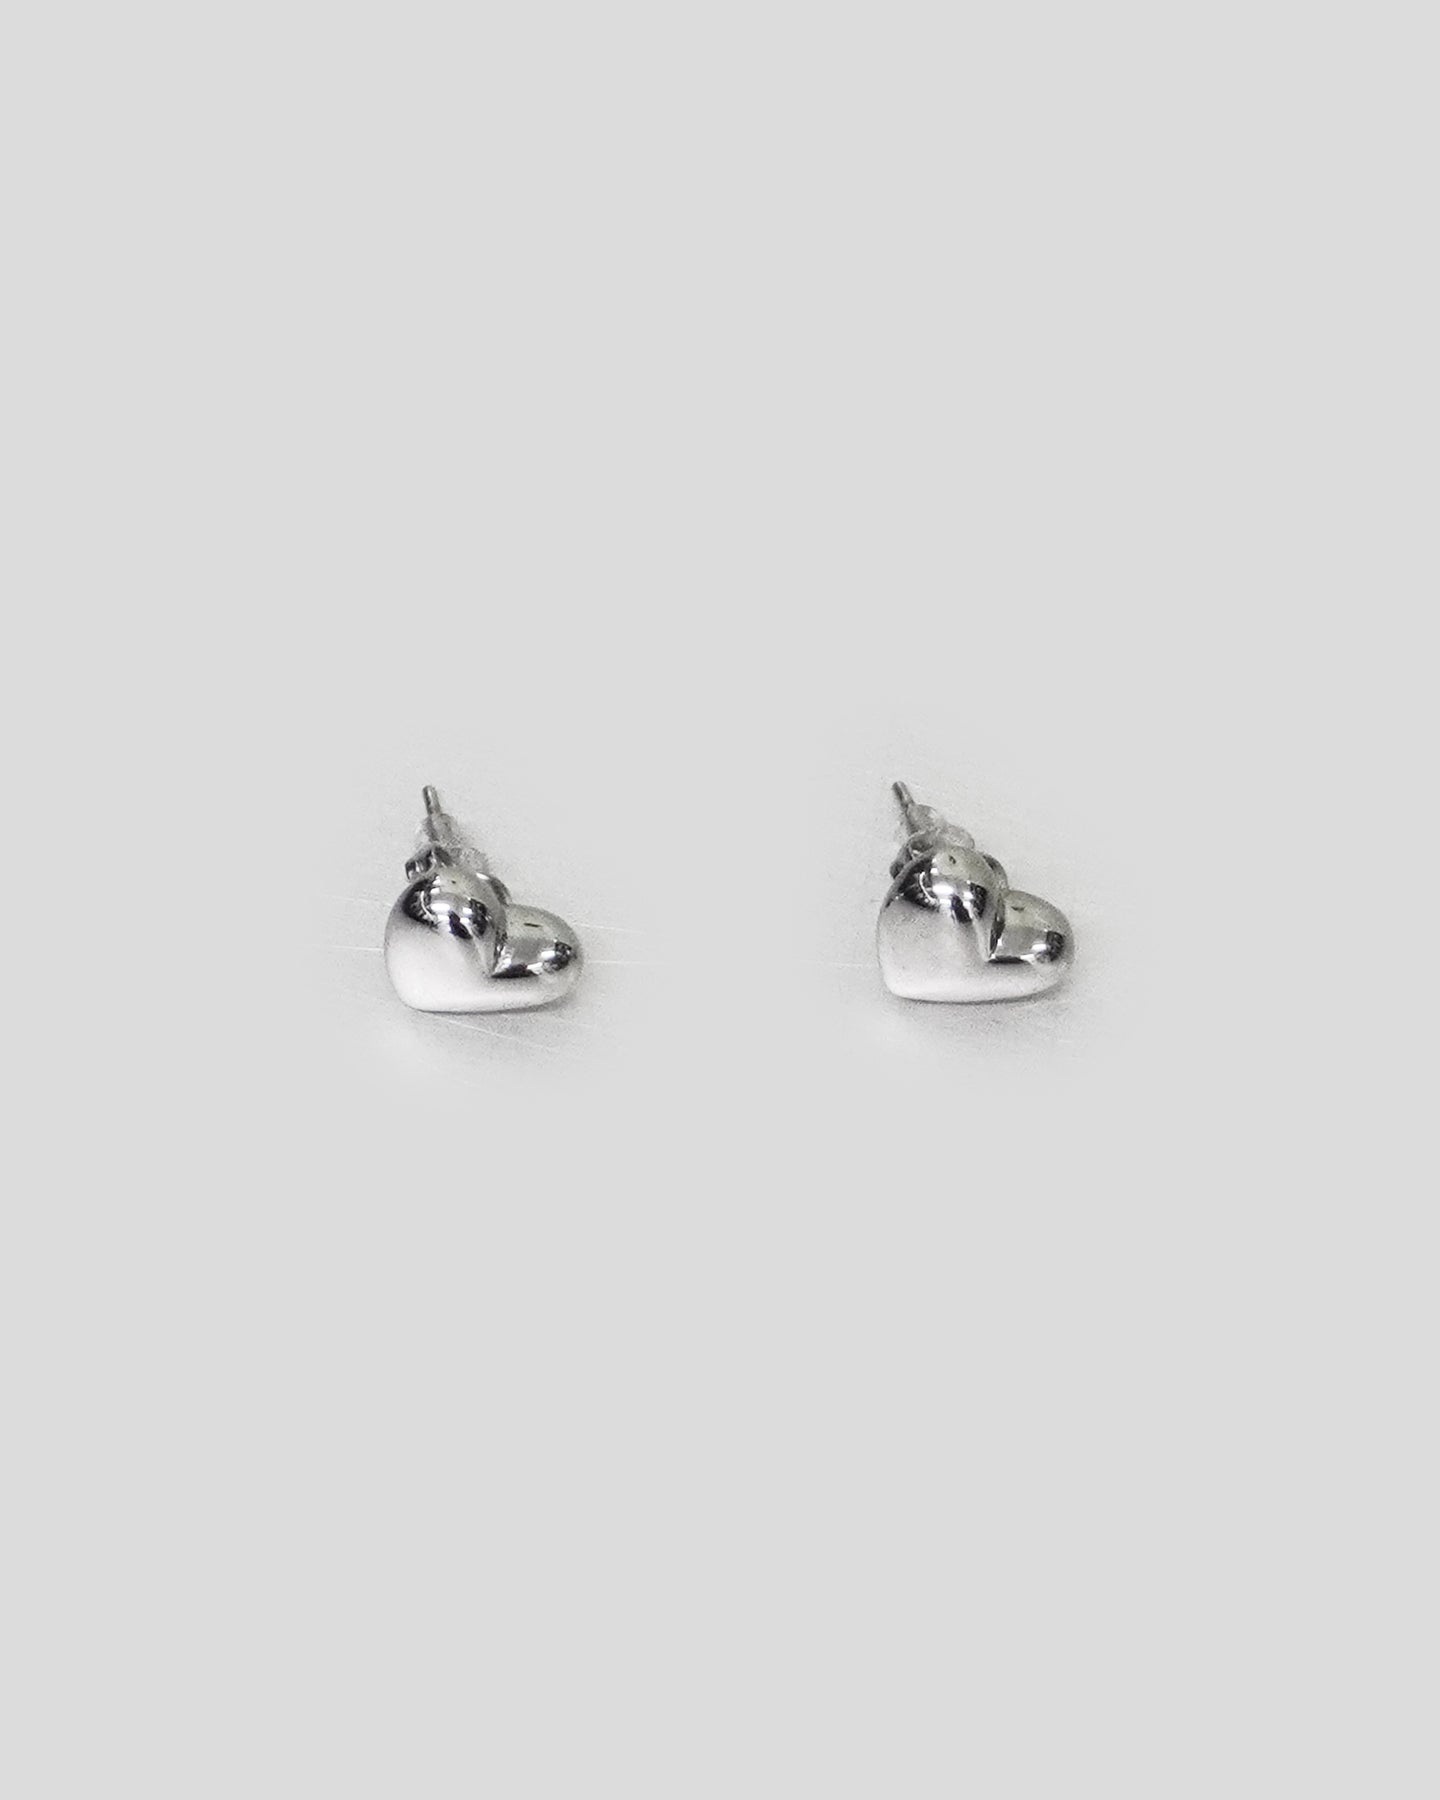 Marland Backus - Pair of Silver Heart Earrings